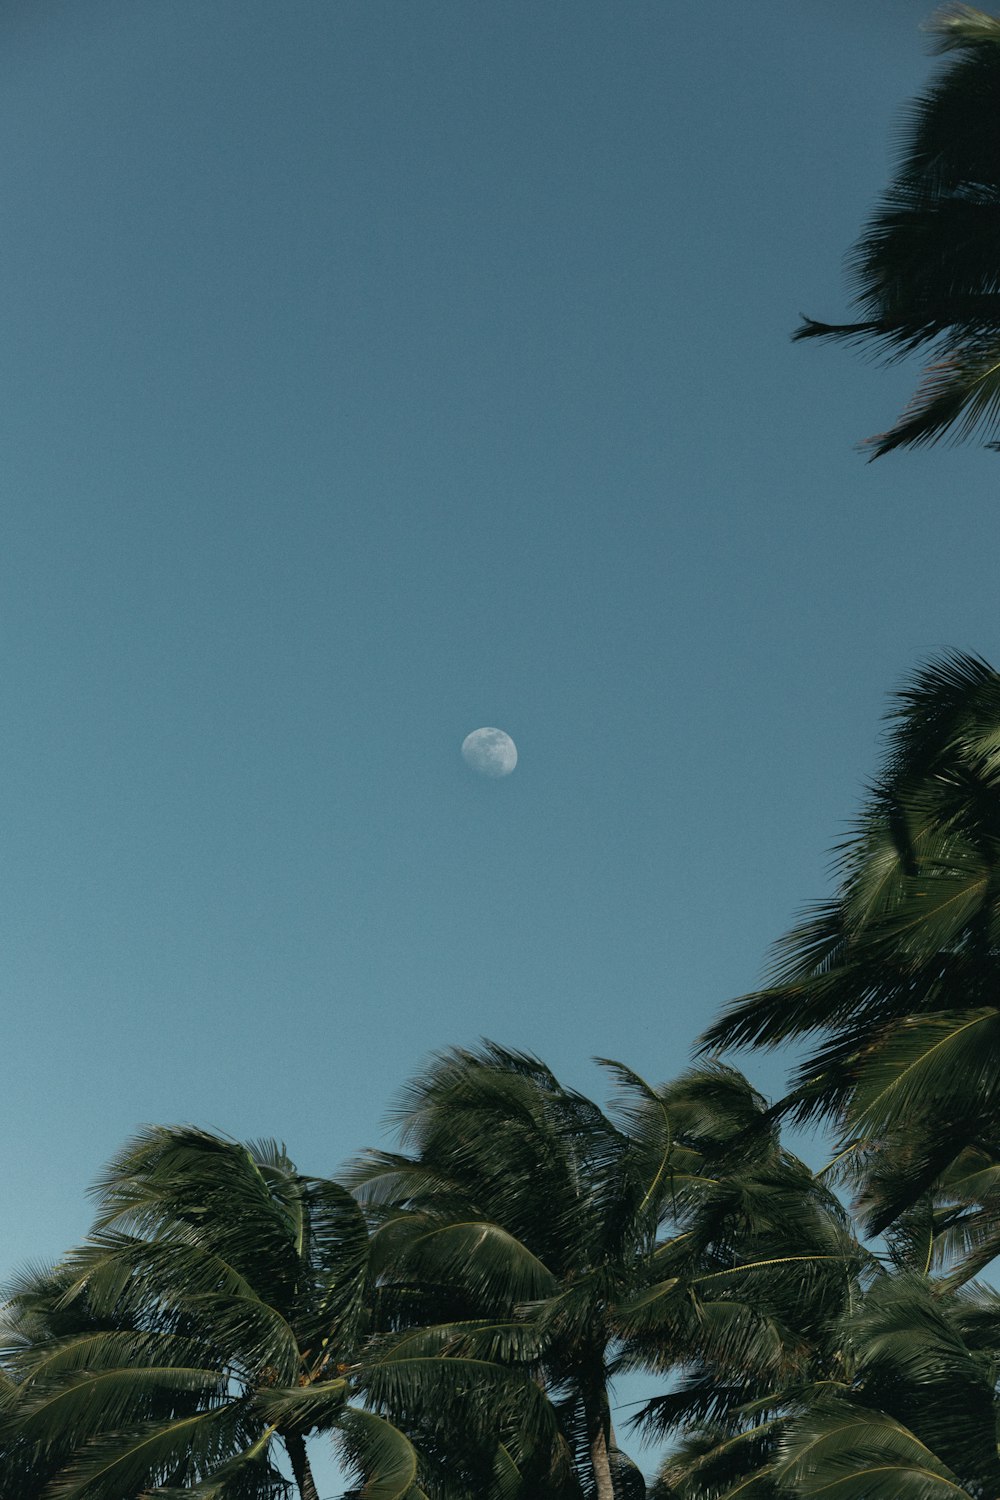 green coconut trees under blue sky